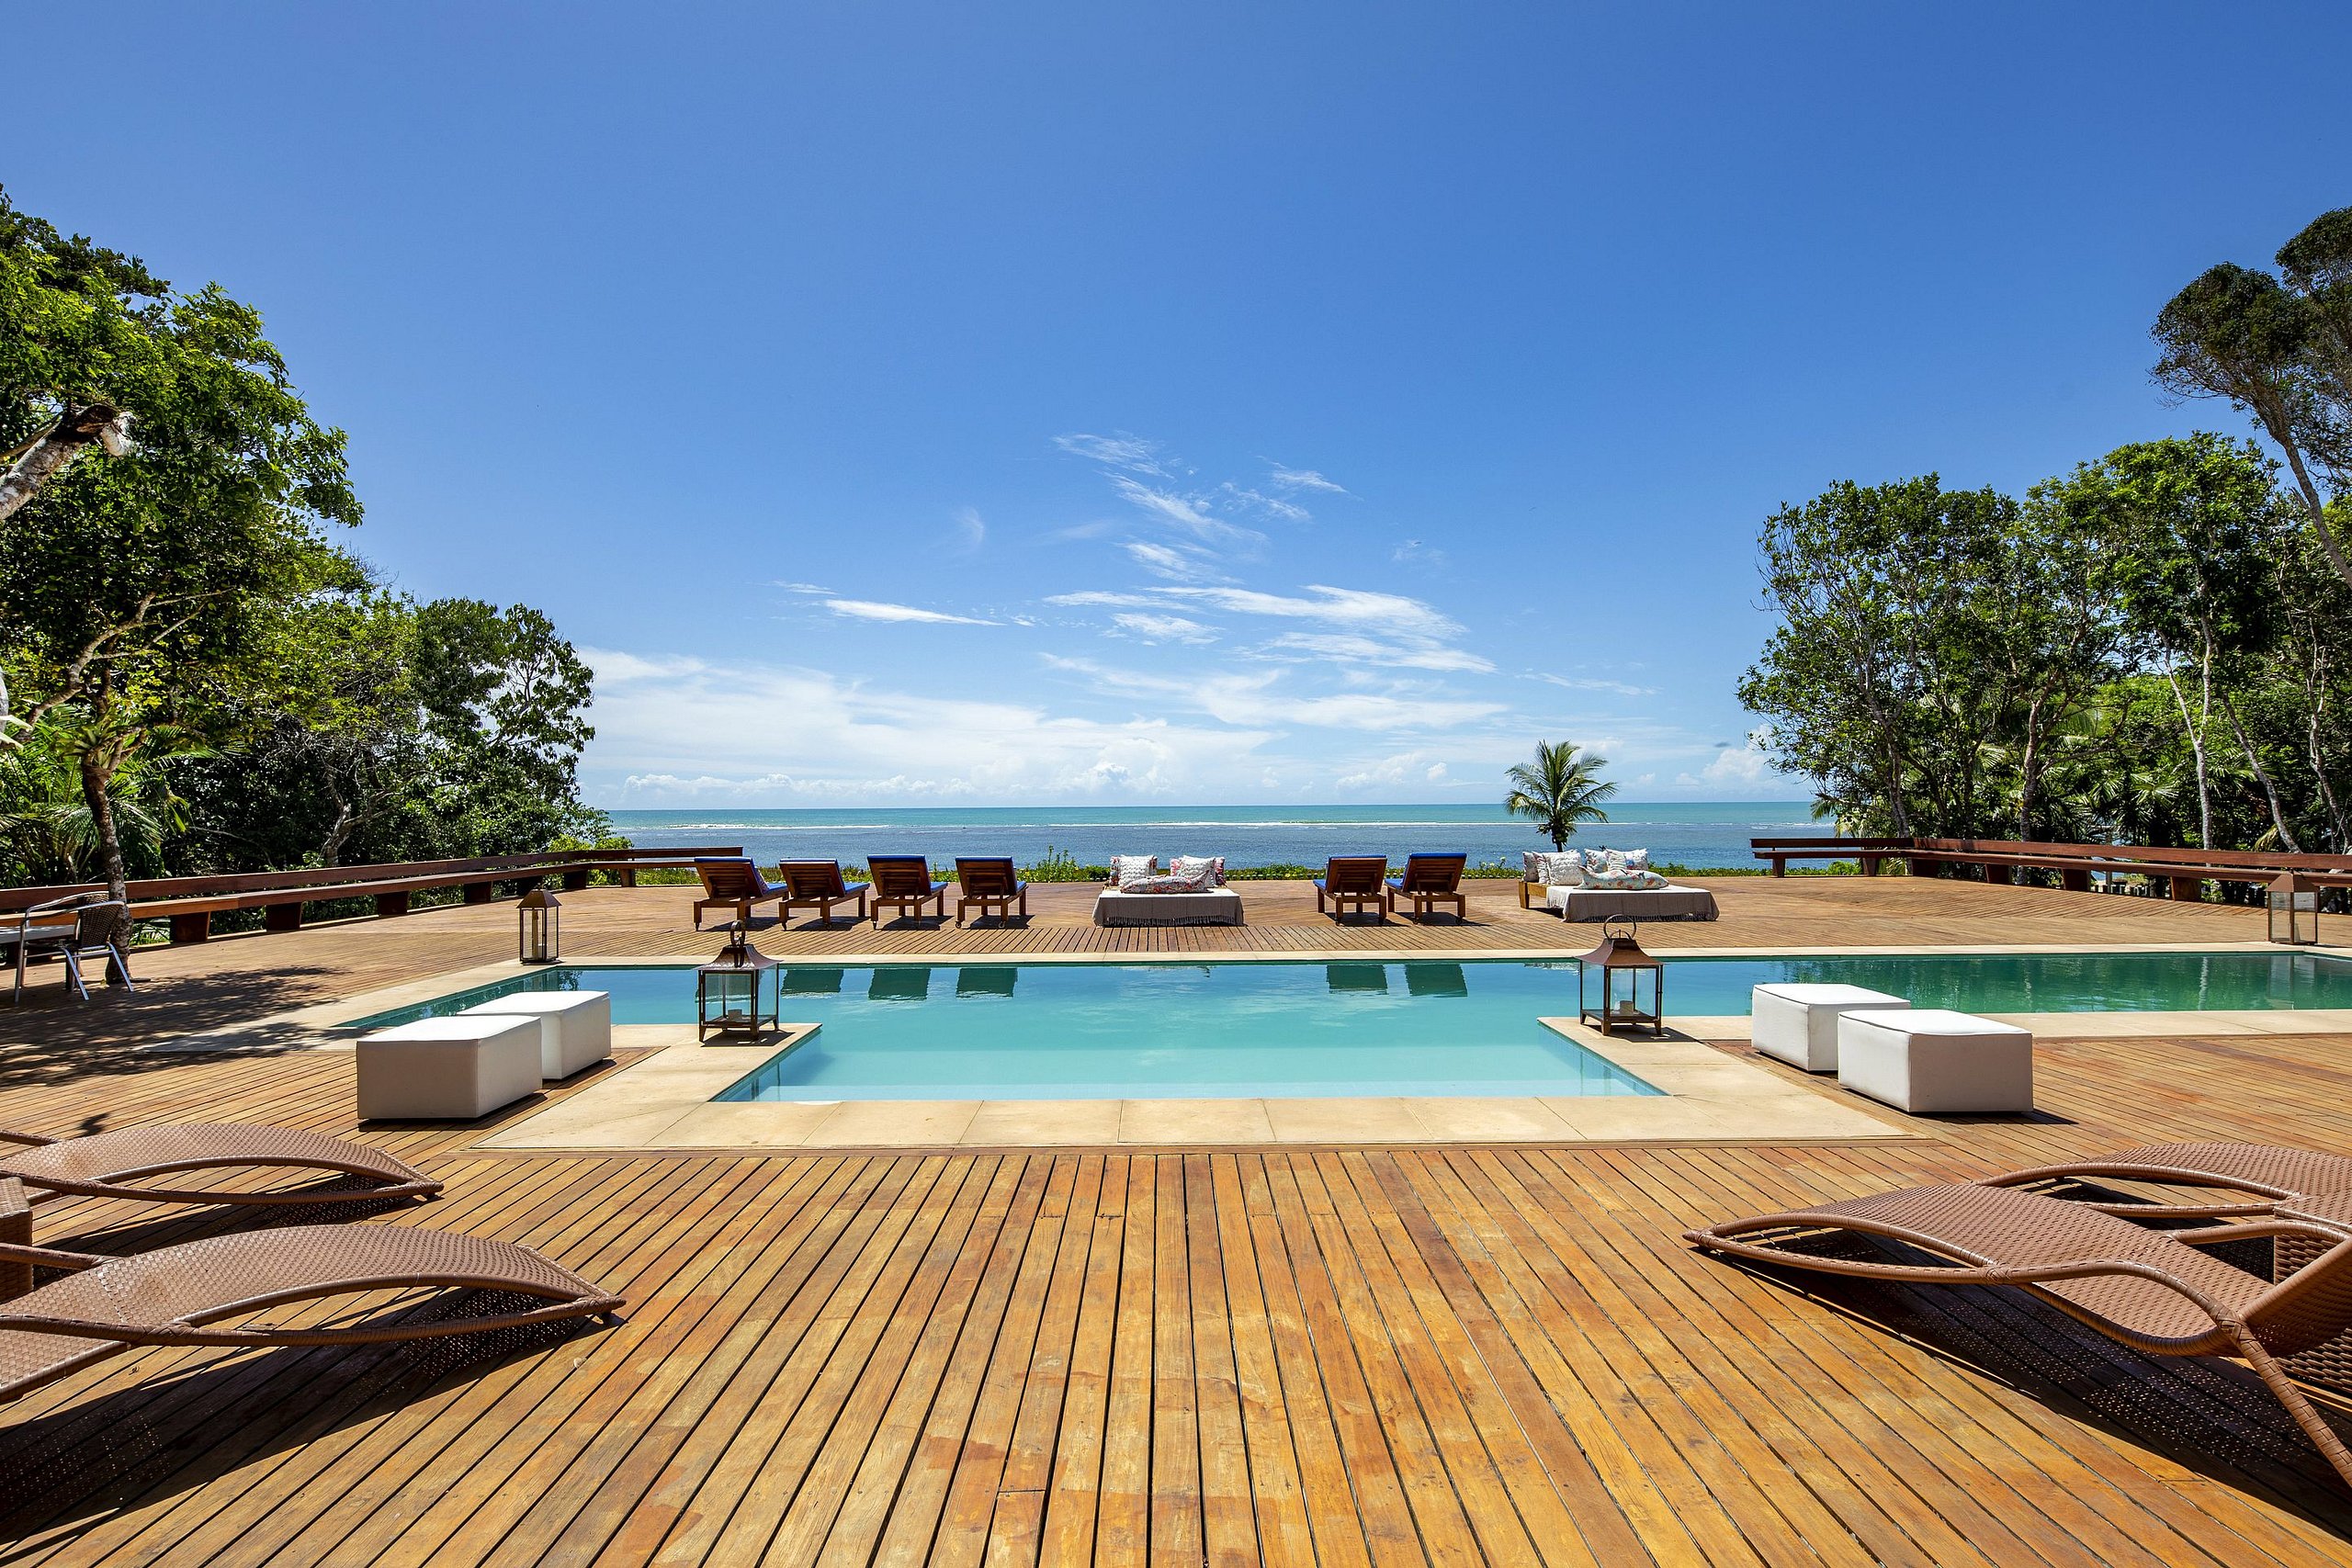 Ten bedroom villa with splendid terrace and large swimming pool